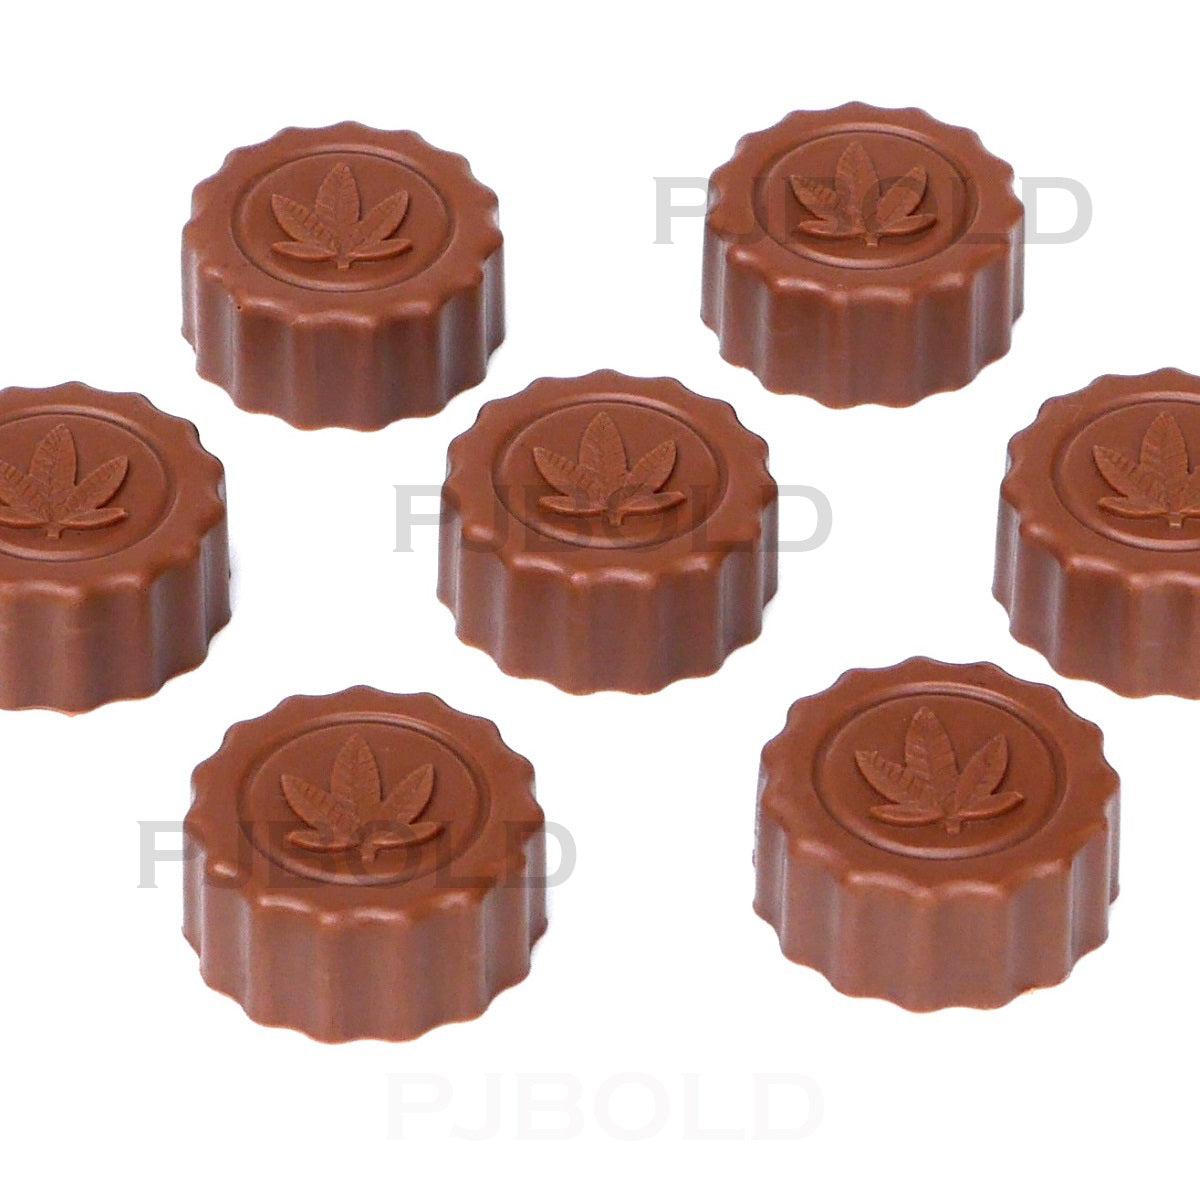 Marijuana Leaf Embossed Silicone Chocolate Candy Mold Ice Cube Trays, 2 Pack